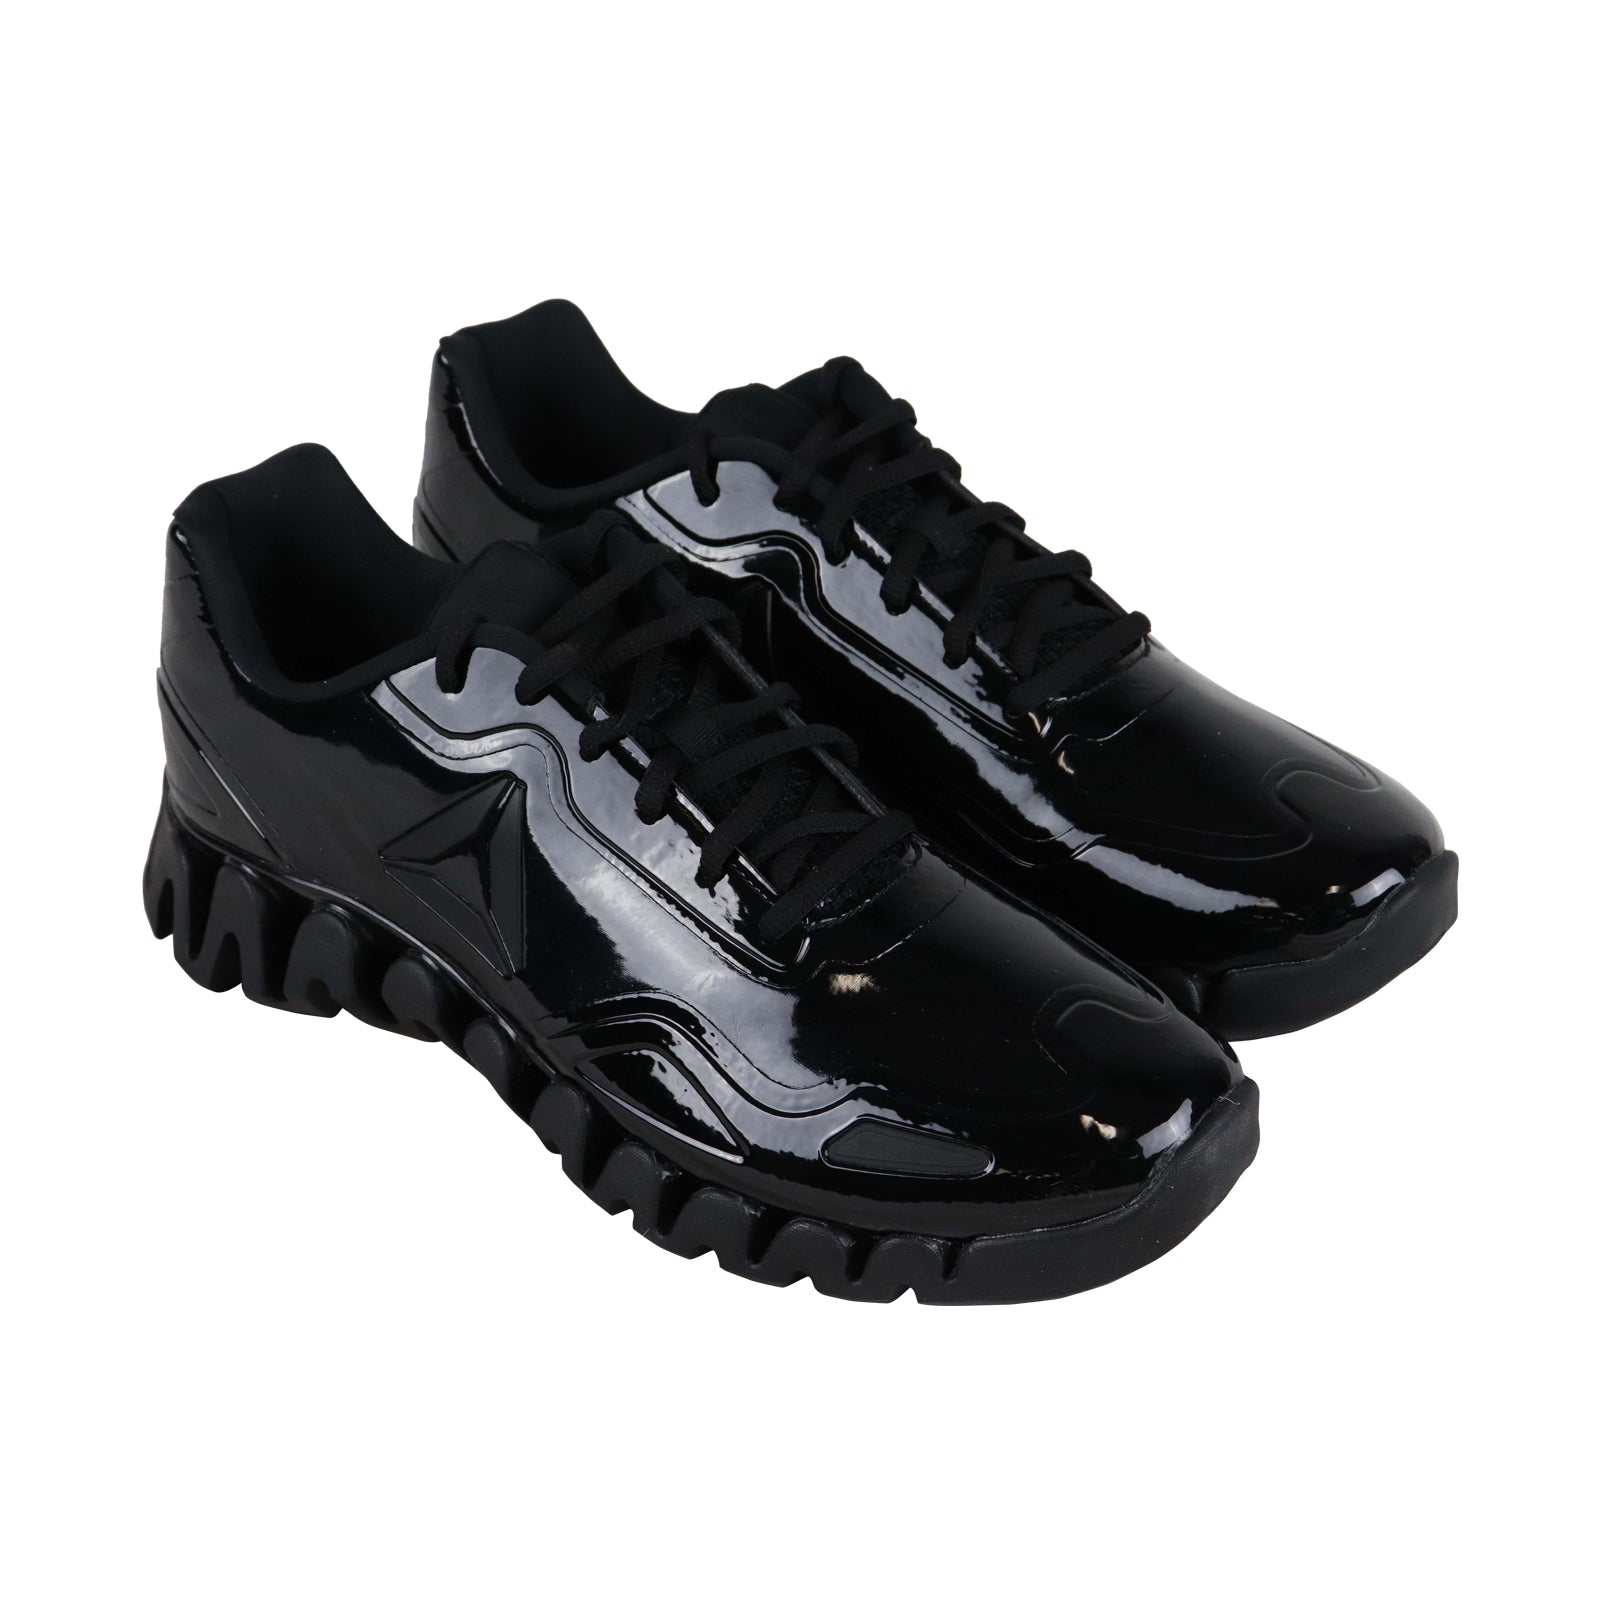 Reebok Zig Pulse SE Patent Ruze DV5221 Runn Gym - Athletic Mens Black Shoes Leather